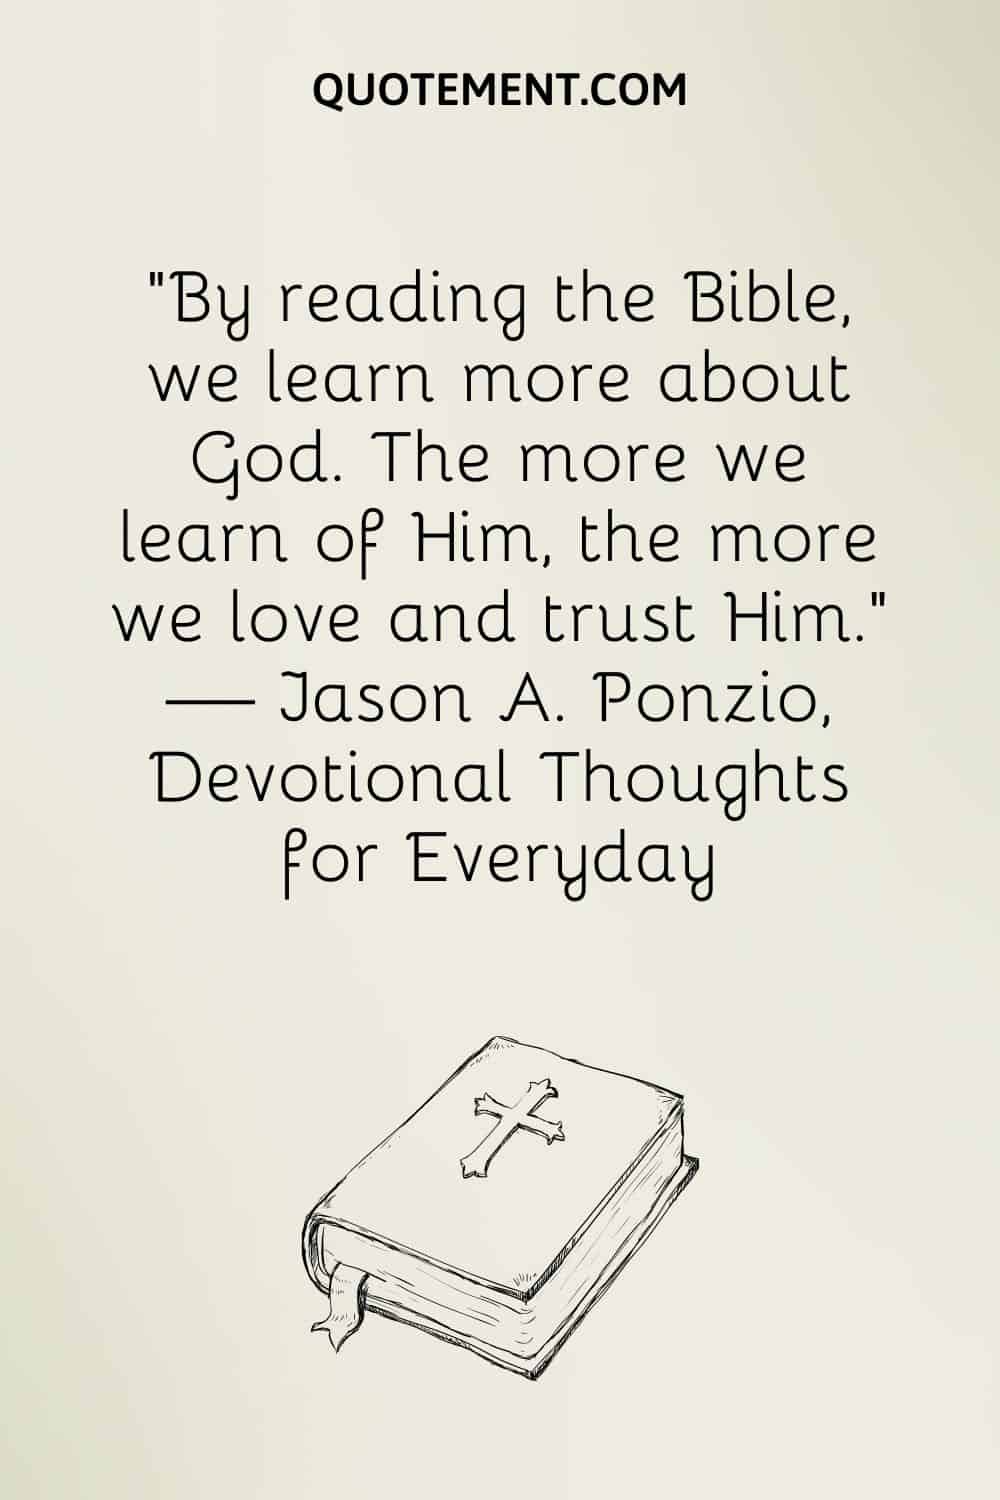 bible illustration representing trusting god quote
